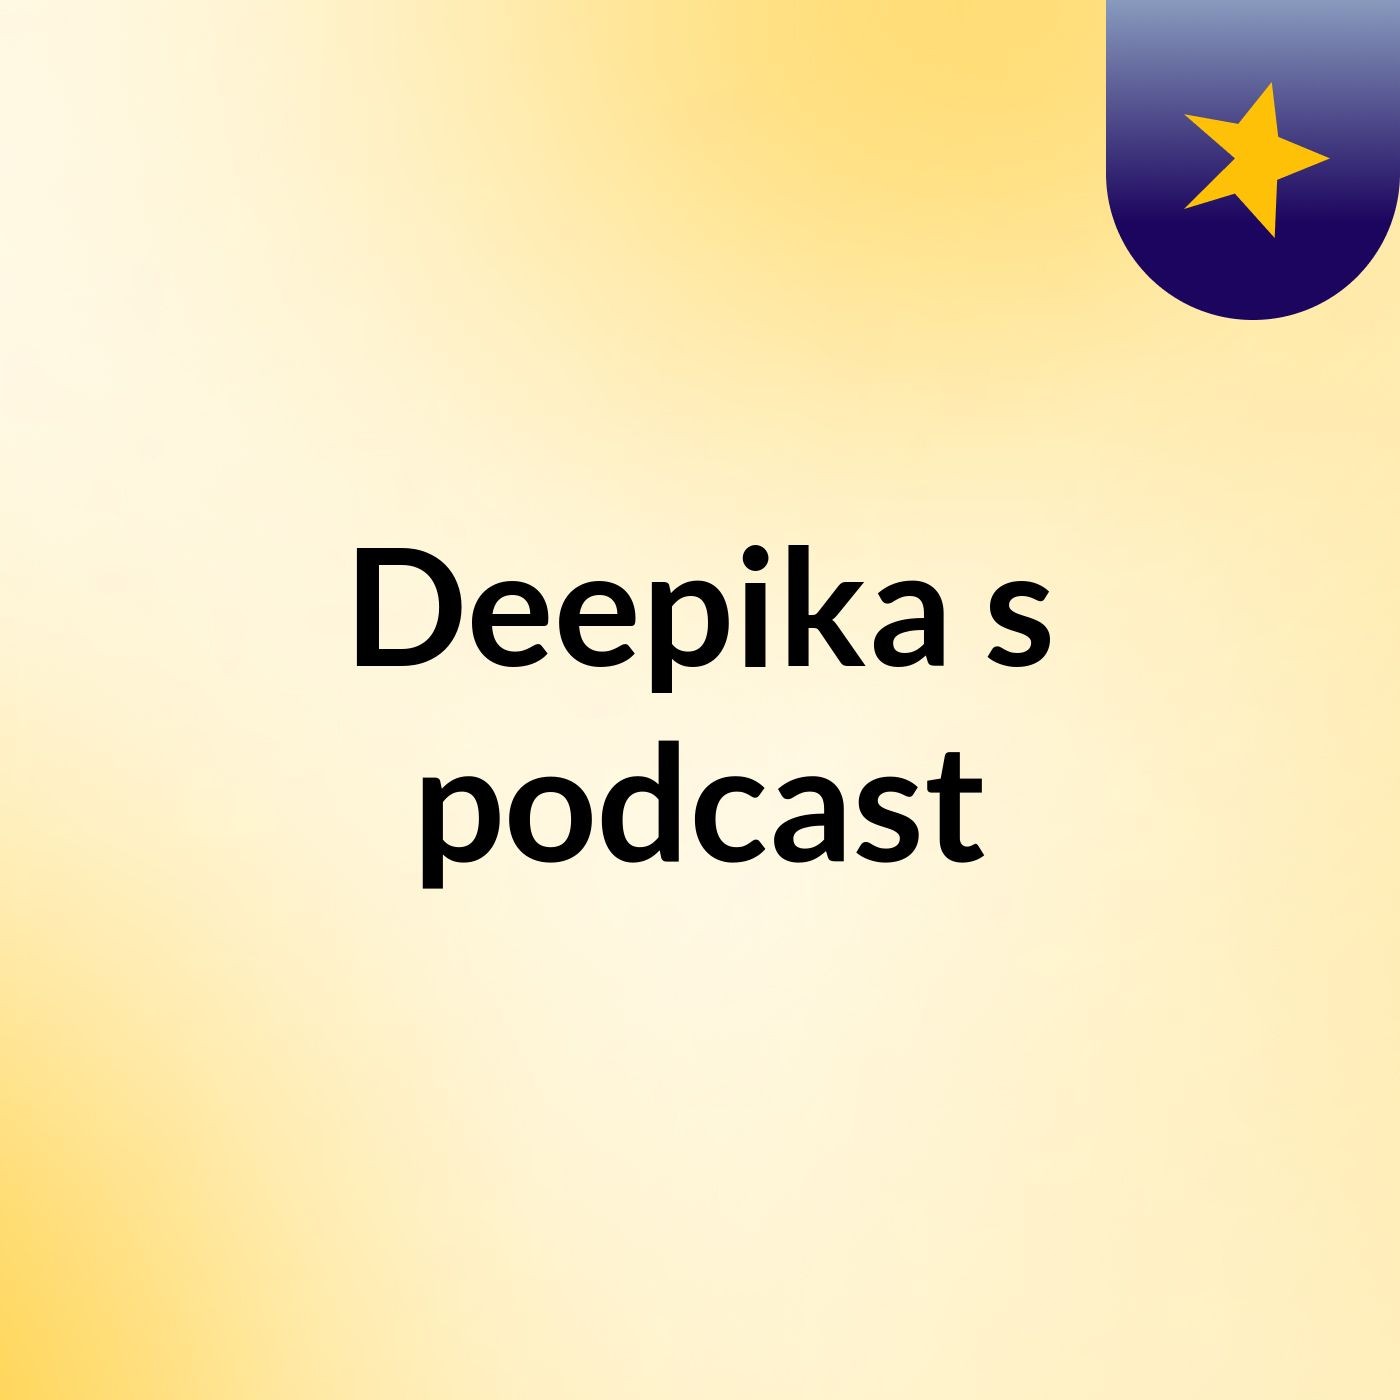 Episode 4 - Deepika's podcast